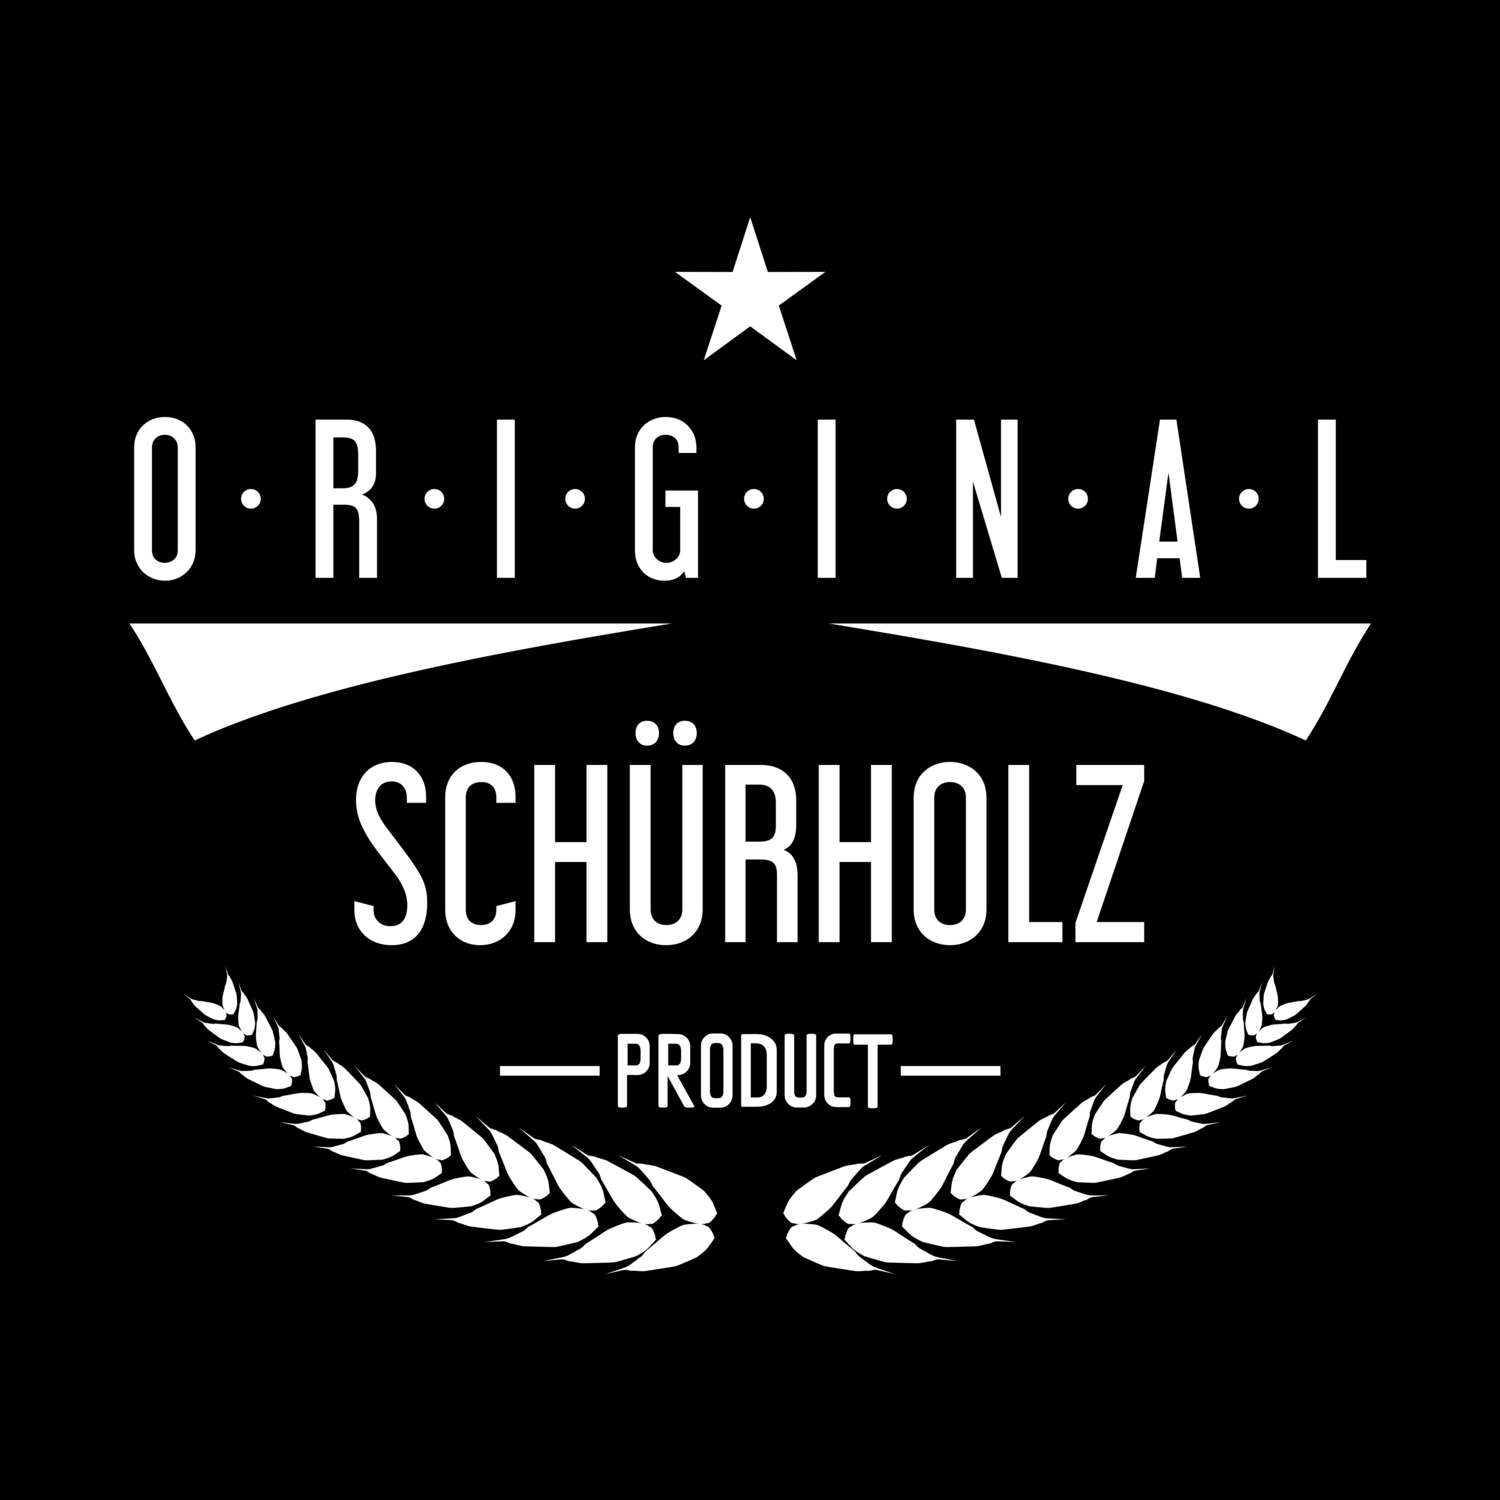 Schürholz T-Shirt »Original Product«